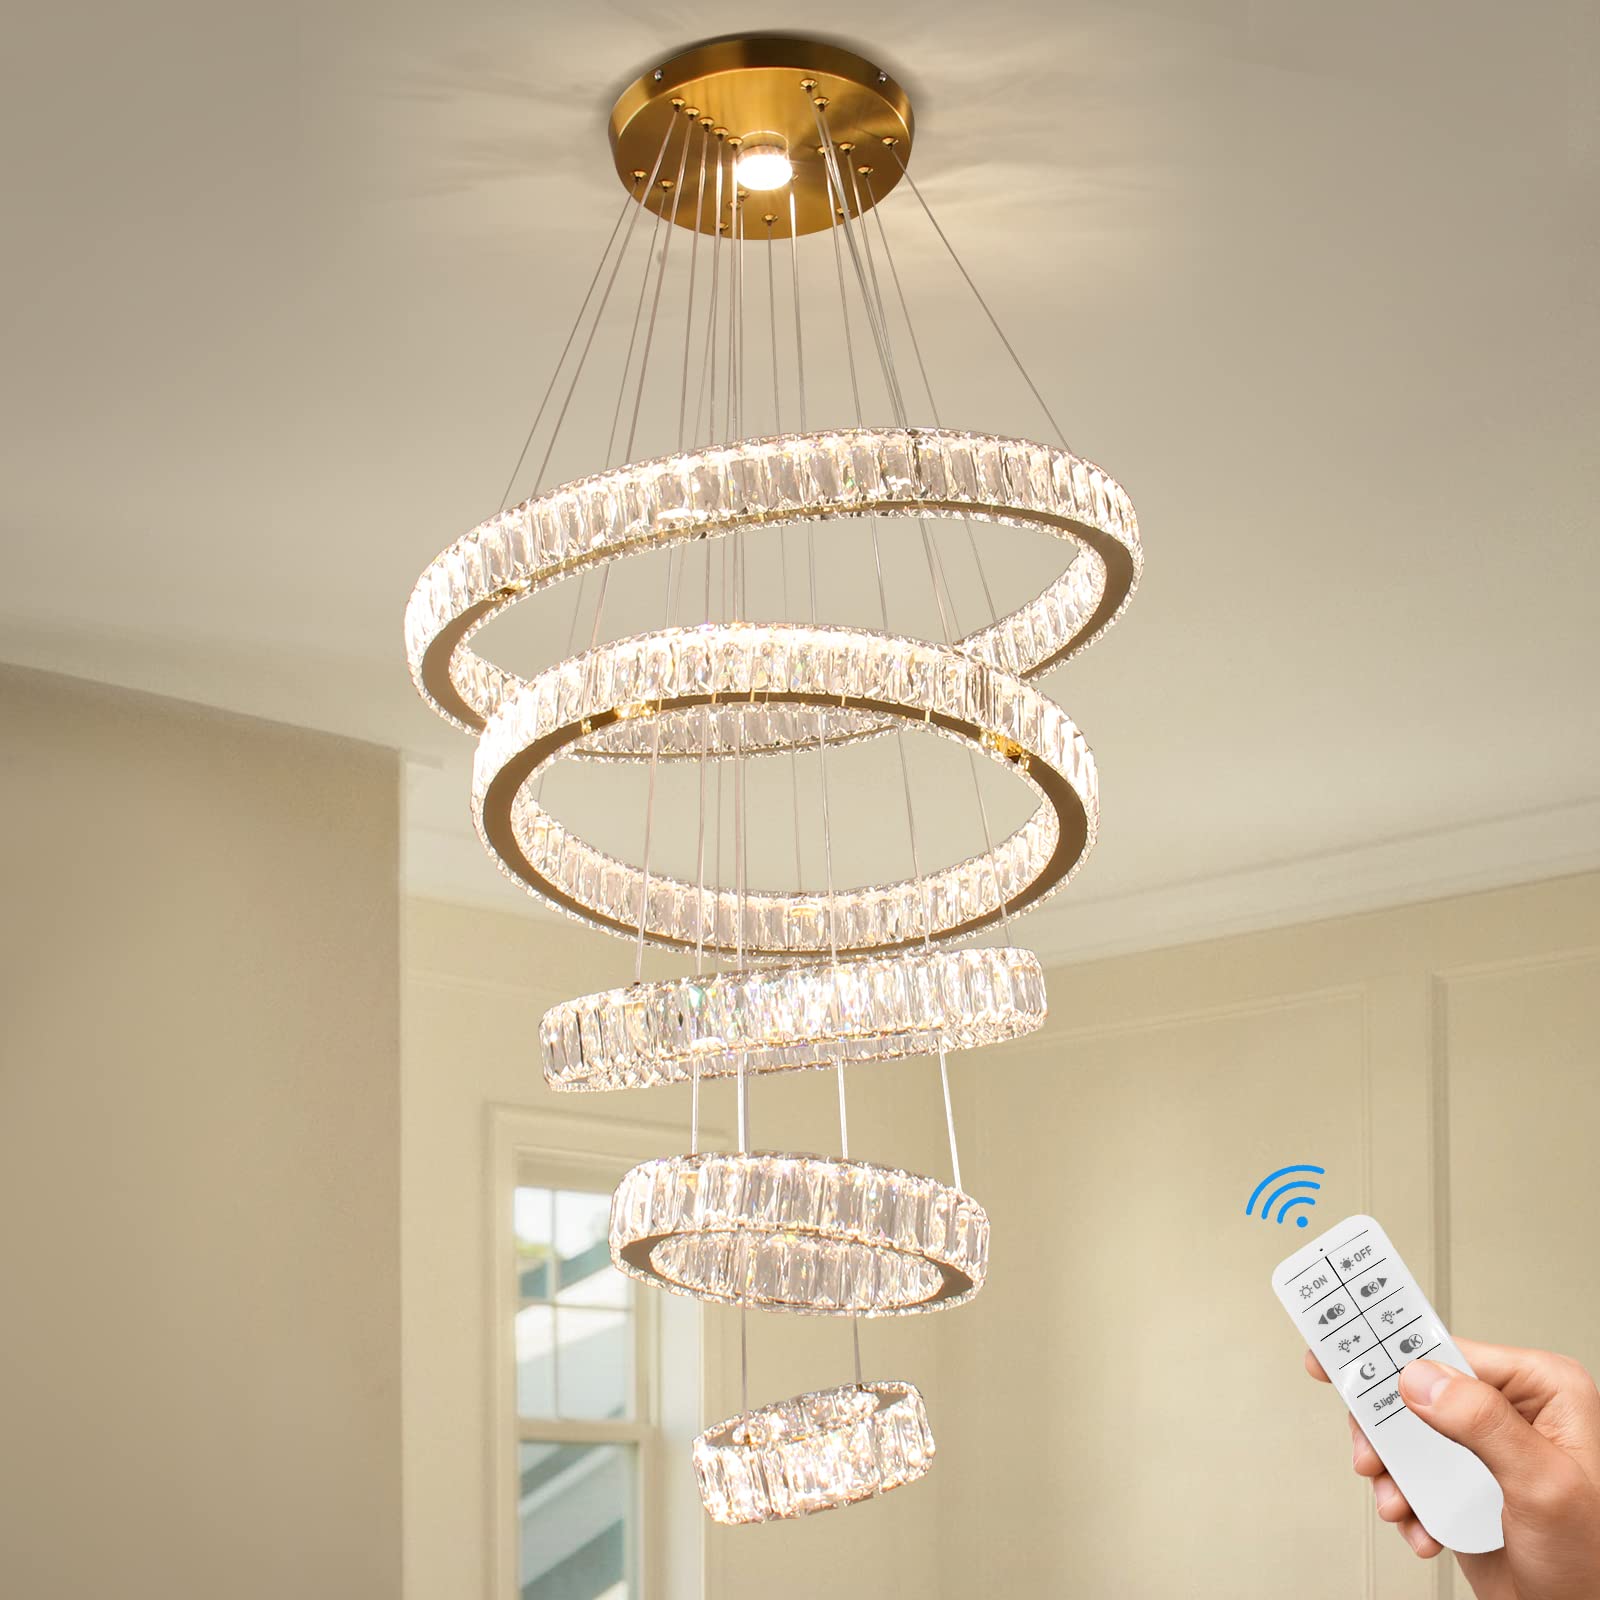 Dixun Dimmable Chandeliers LED Big Crystal Chandeliers Modern 5 Rings Pendant Light Adjustable Ceiling Light for Bedroom Dinning Room Kitchen